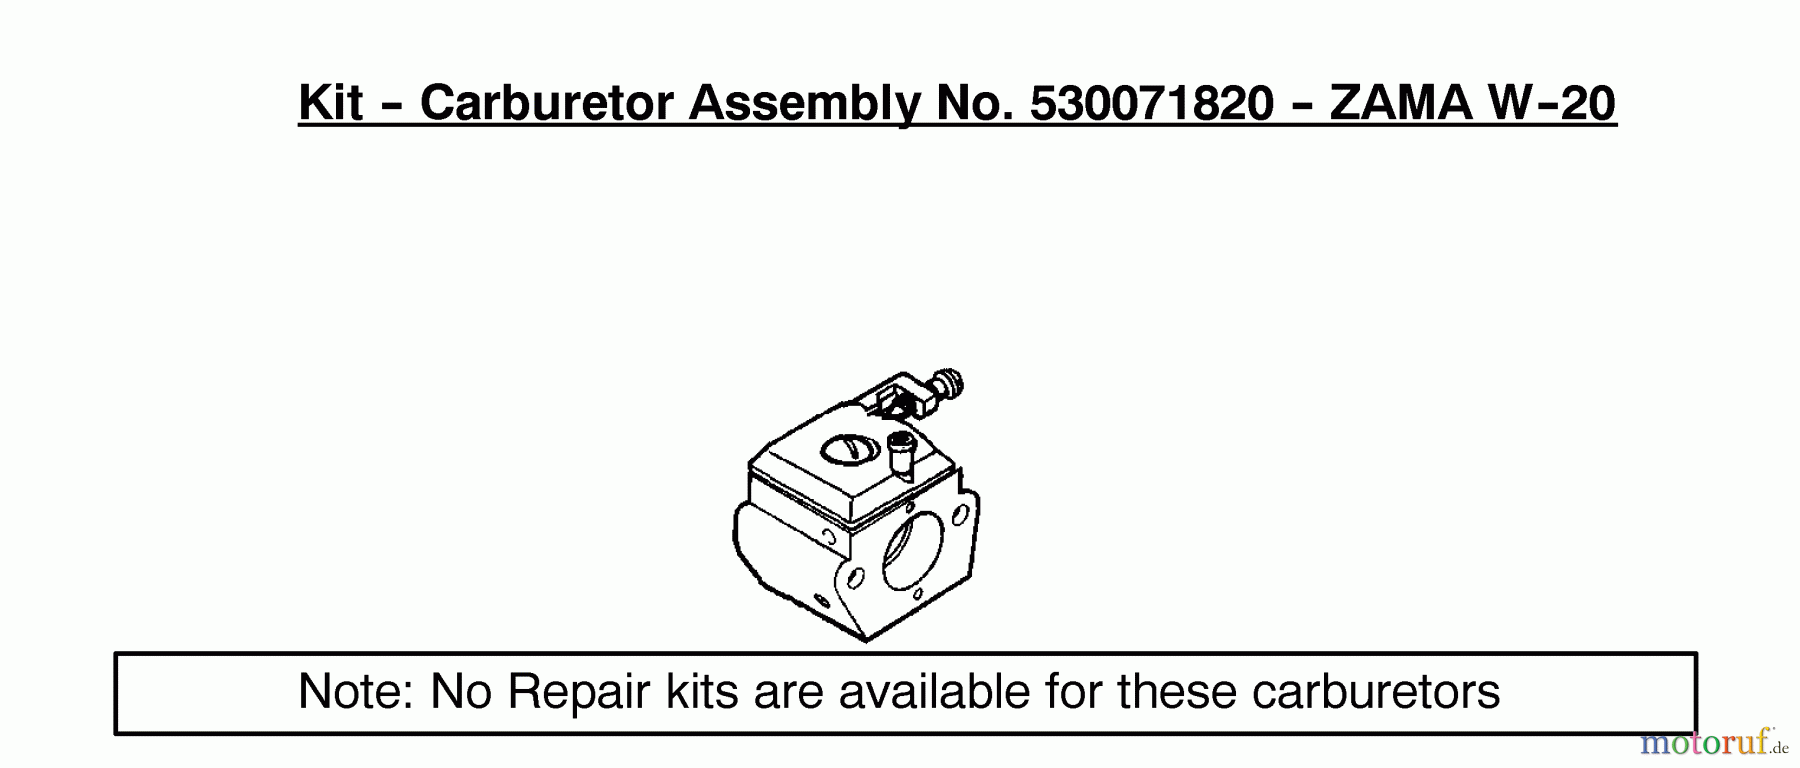  Poulan / Weed Eater Motorsägen 2550LE (Type 2) - Poulan Woodmaster Chainsaw Carburetor Assembly Kit (ZAMA W-20) 530071820